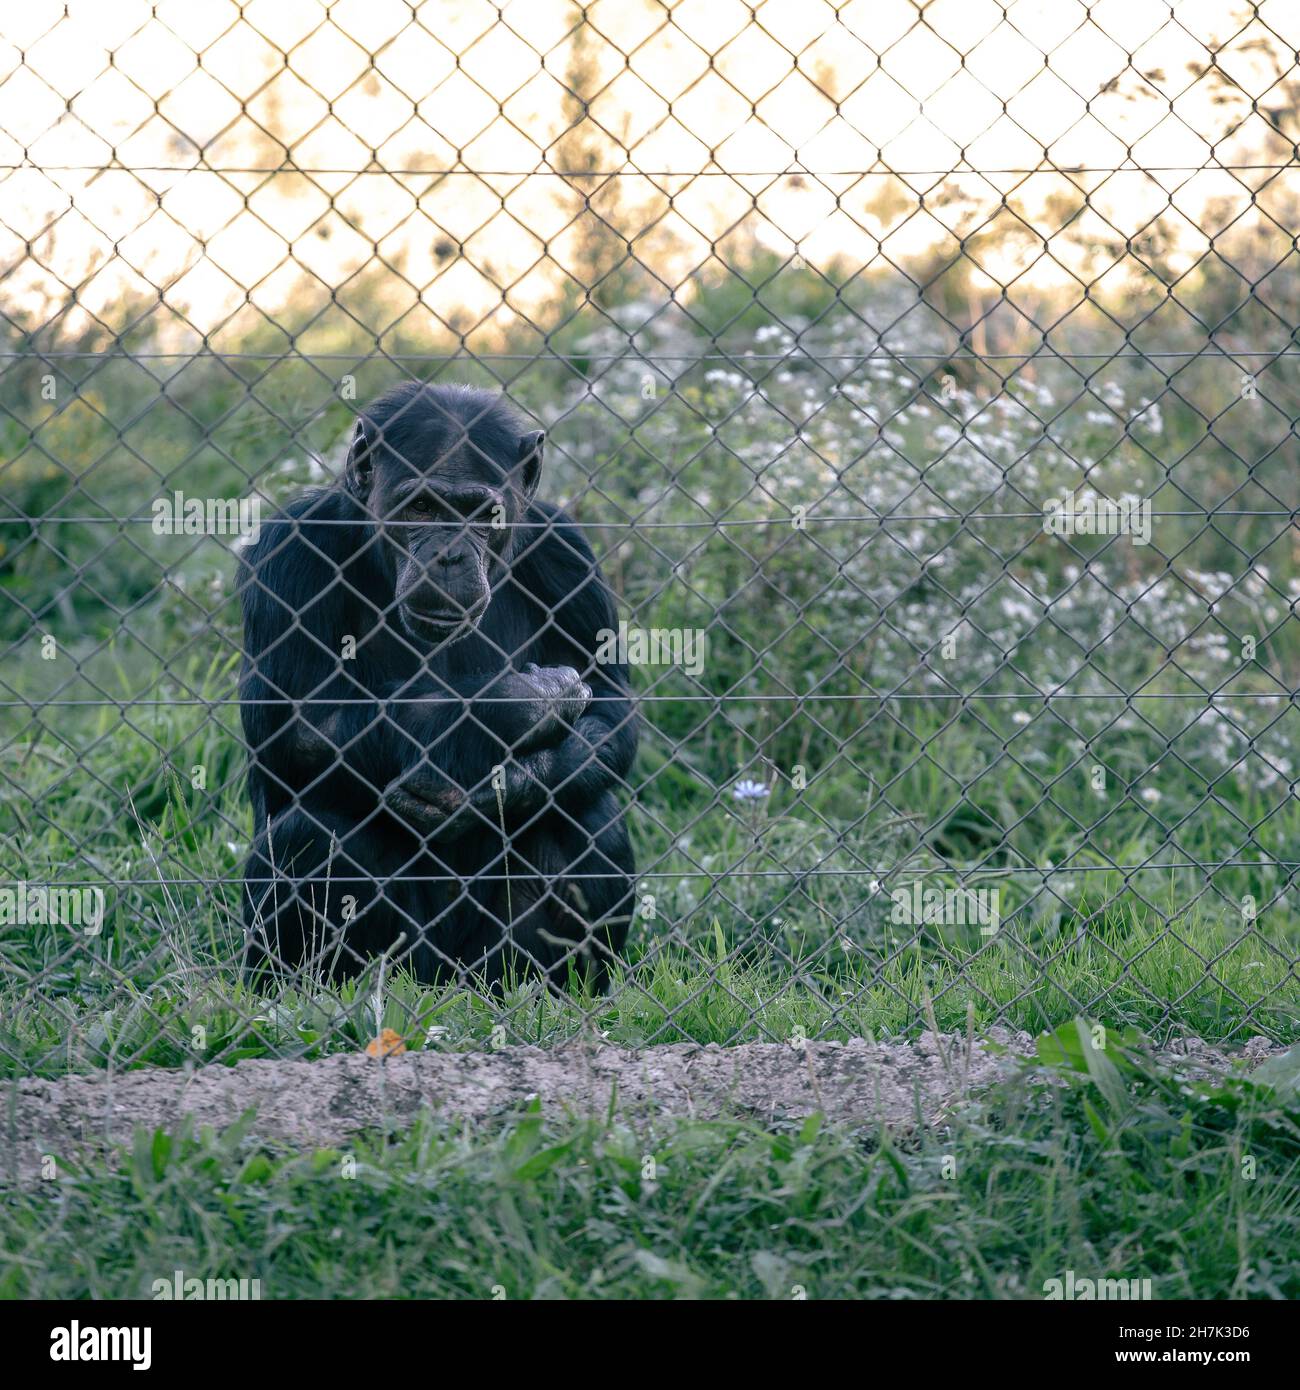 Black quiet wild chimpanzee in captivity behind a metal fence Stock Photo